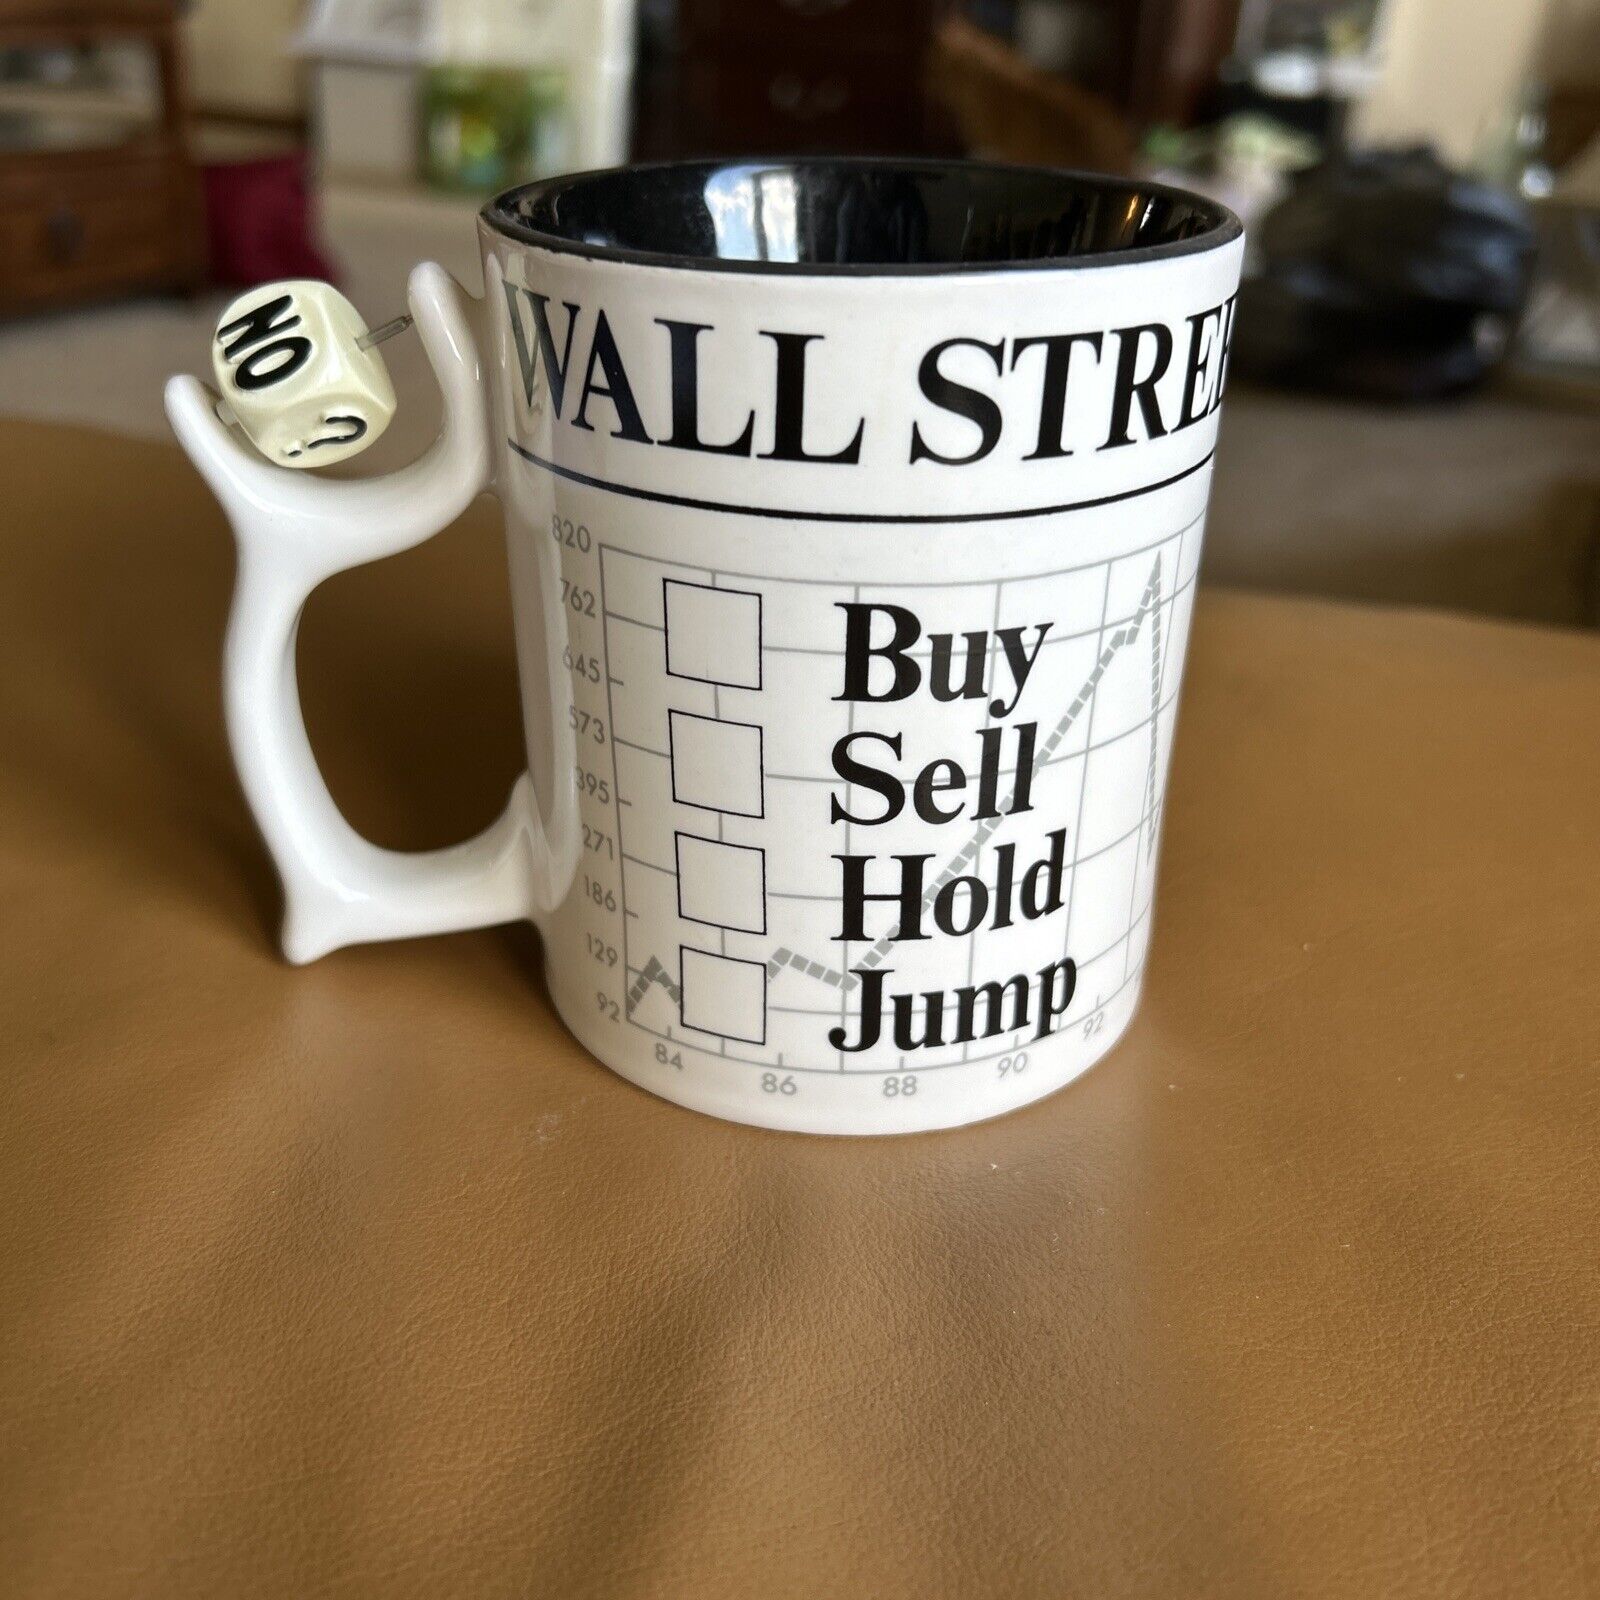 Wall Street Stock Buy Sell Hold Jump Coffee Mug Spinners Dice Gamble Market